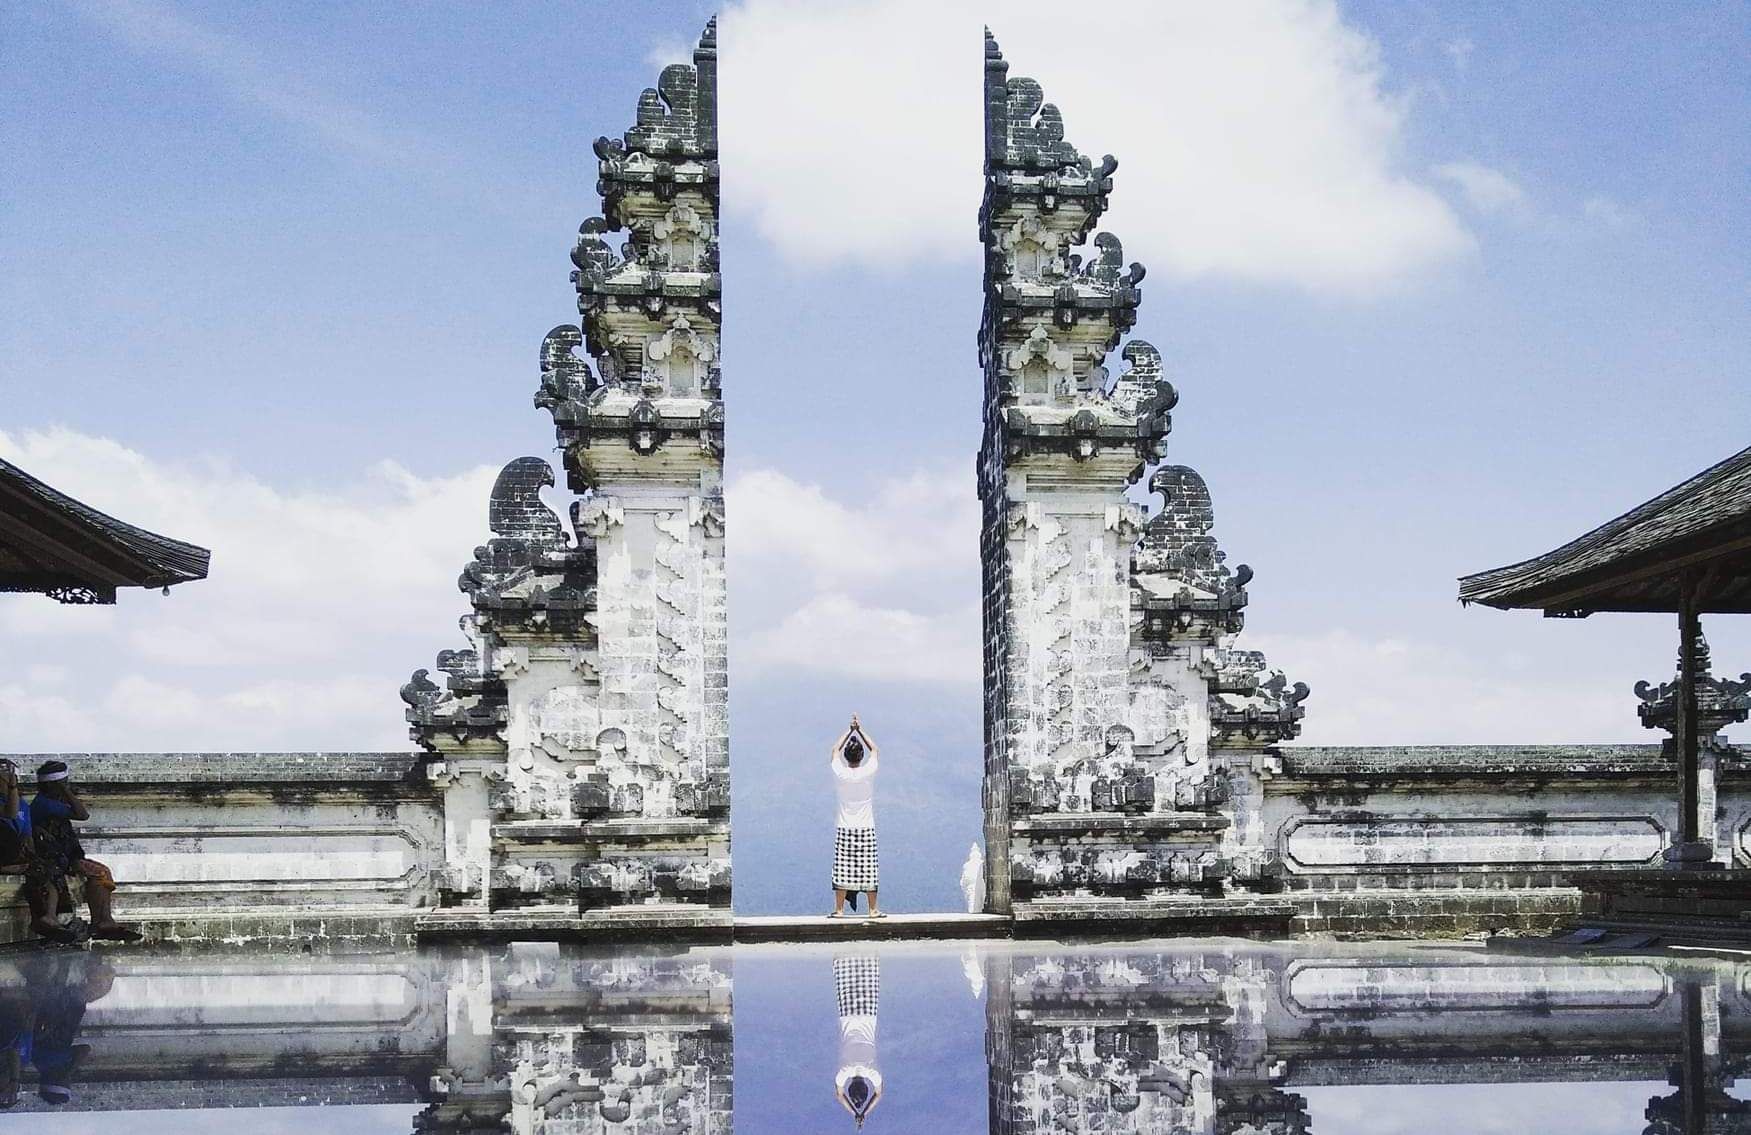 Bali’s Lempuyang Temple doesn’t actually have a lake